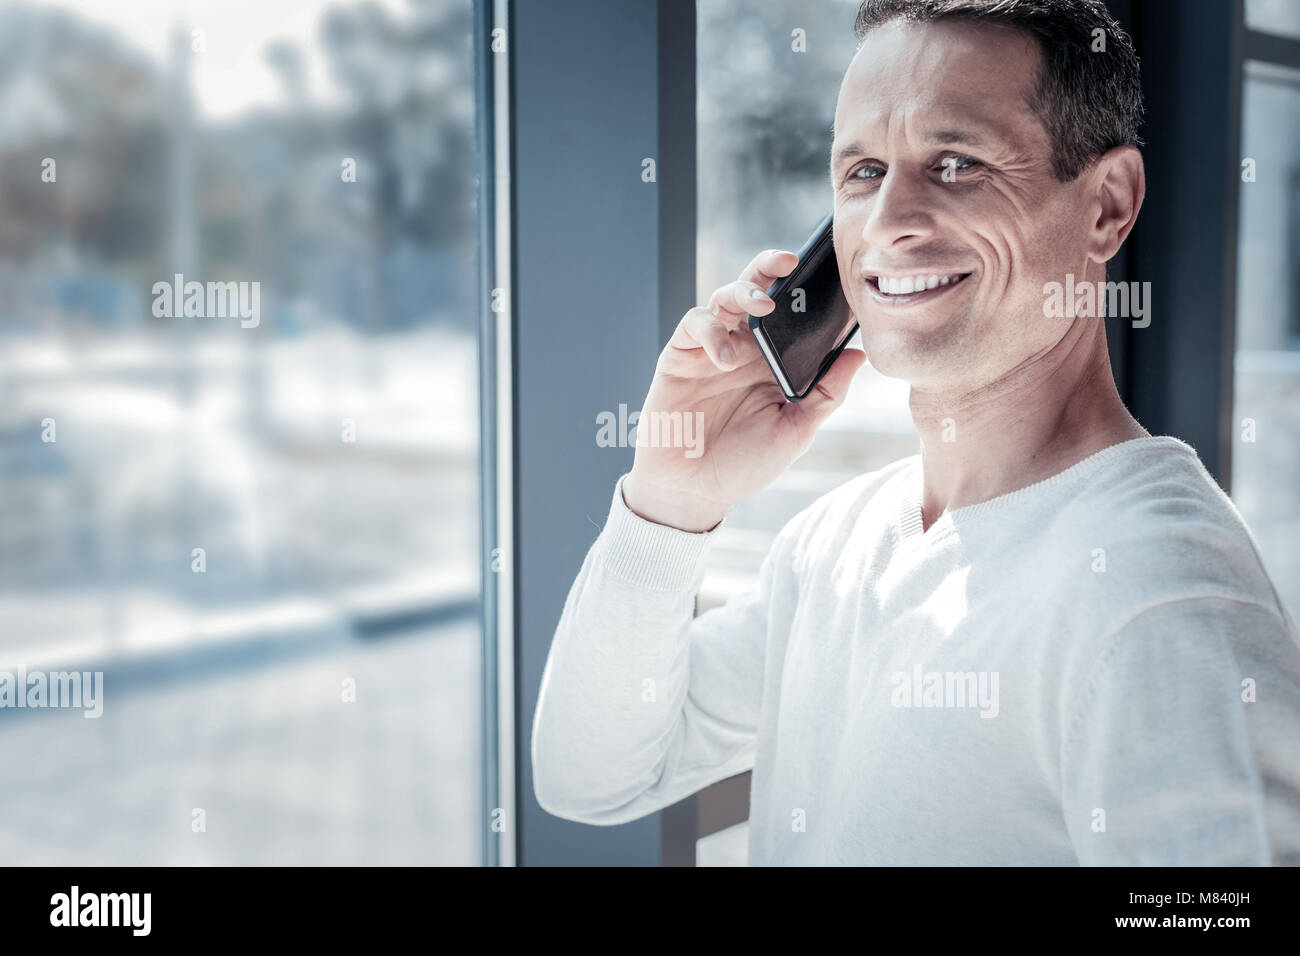 Pleasant joyful man having phone conversation and smiling. Stock Photo